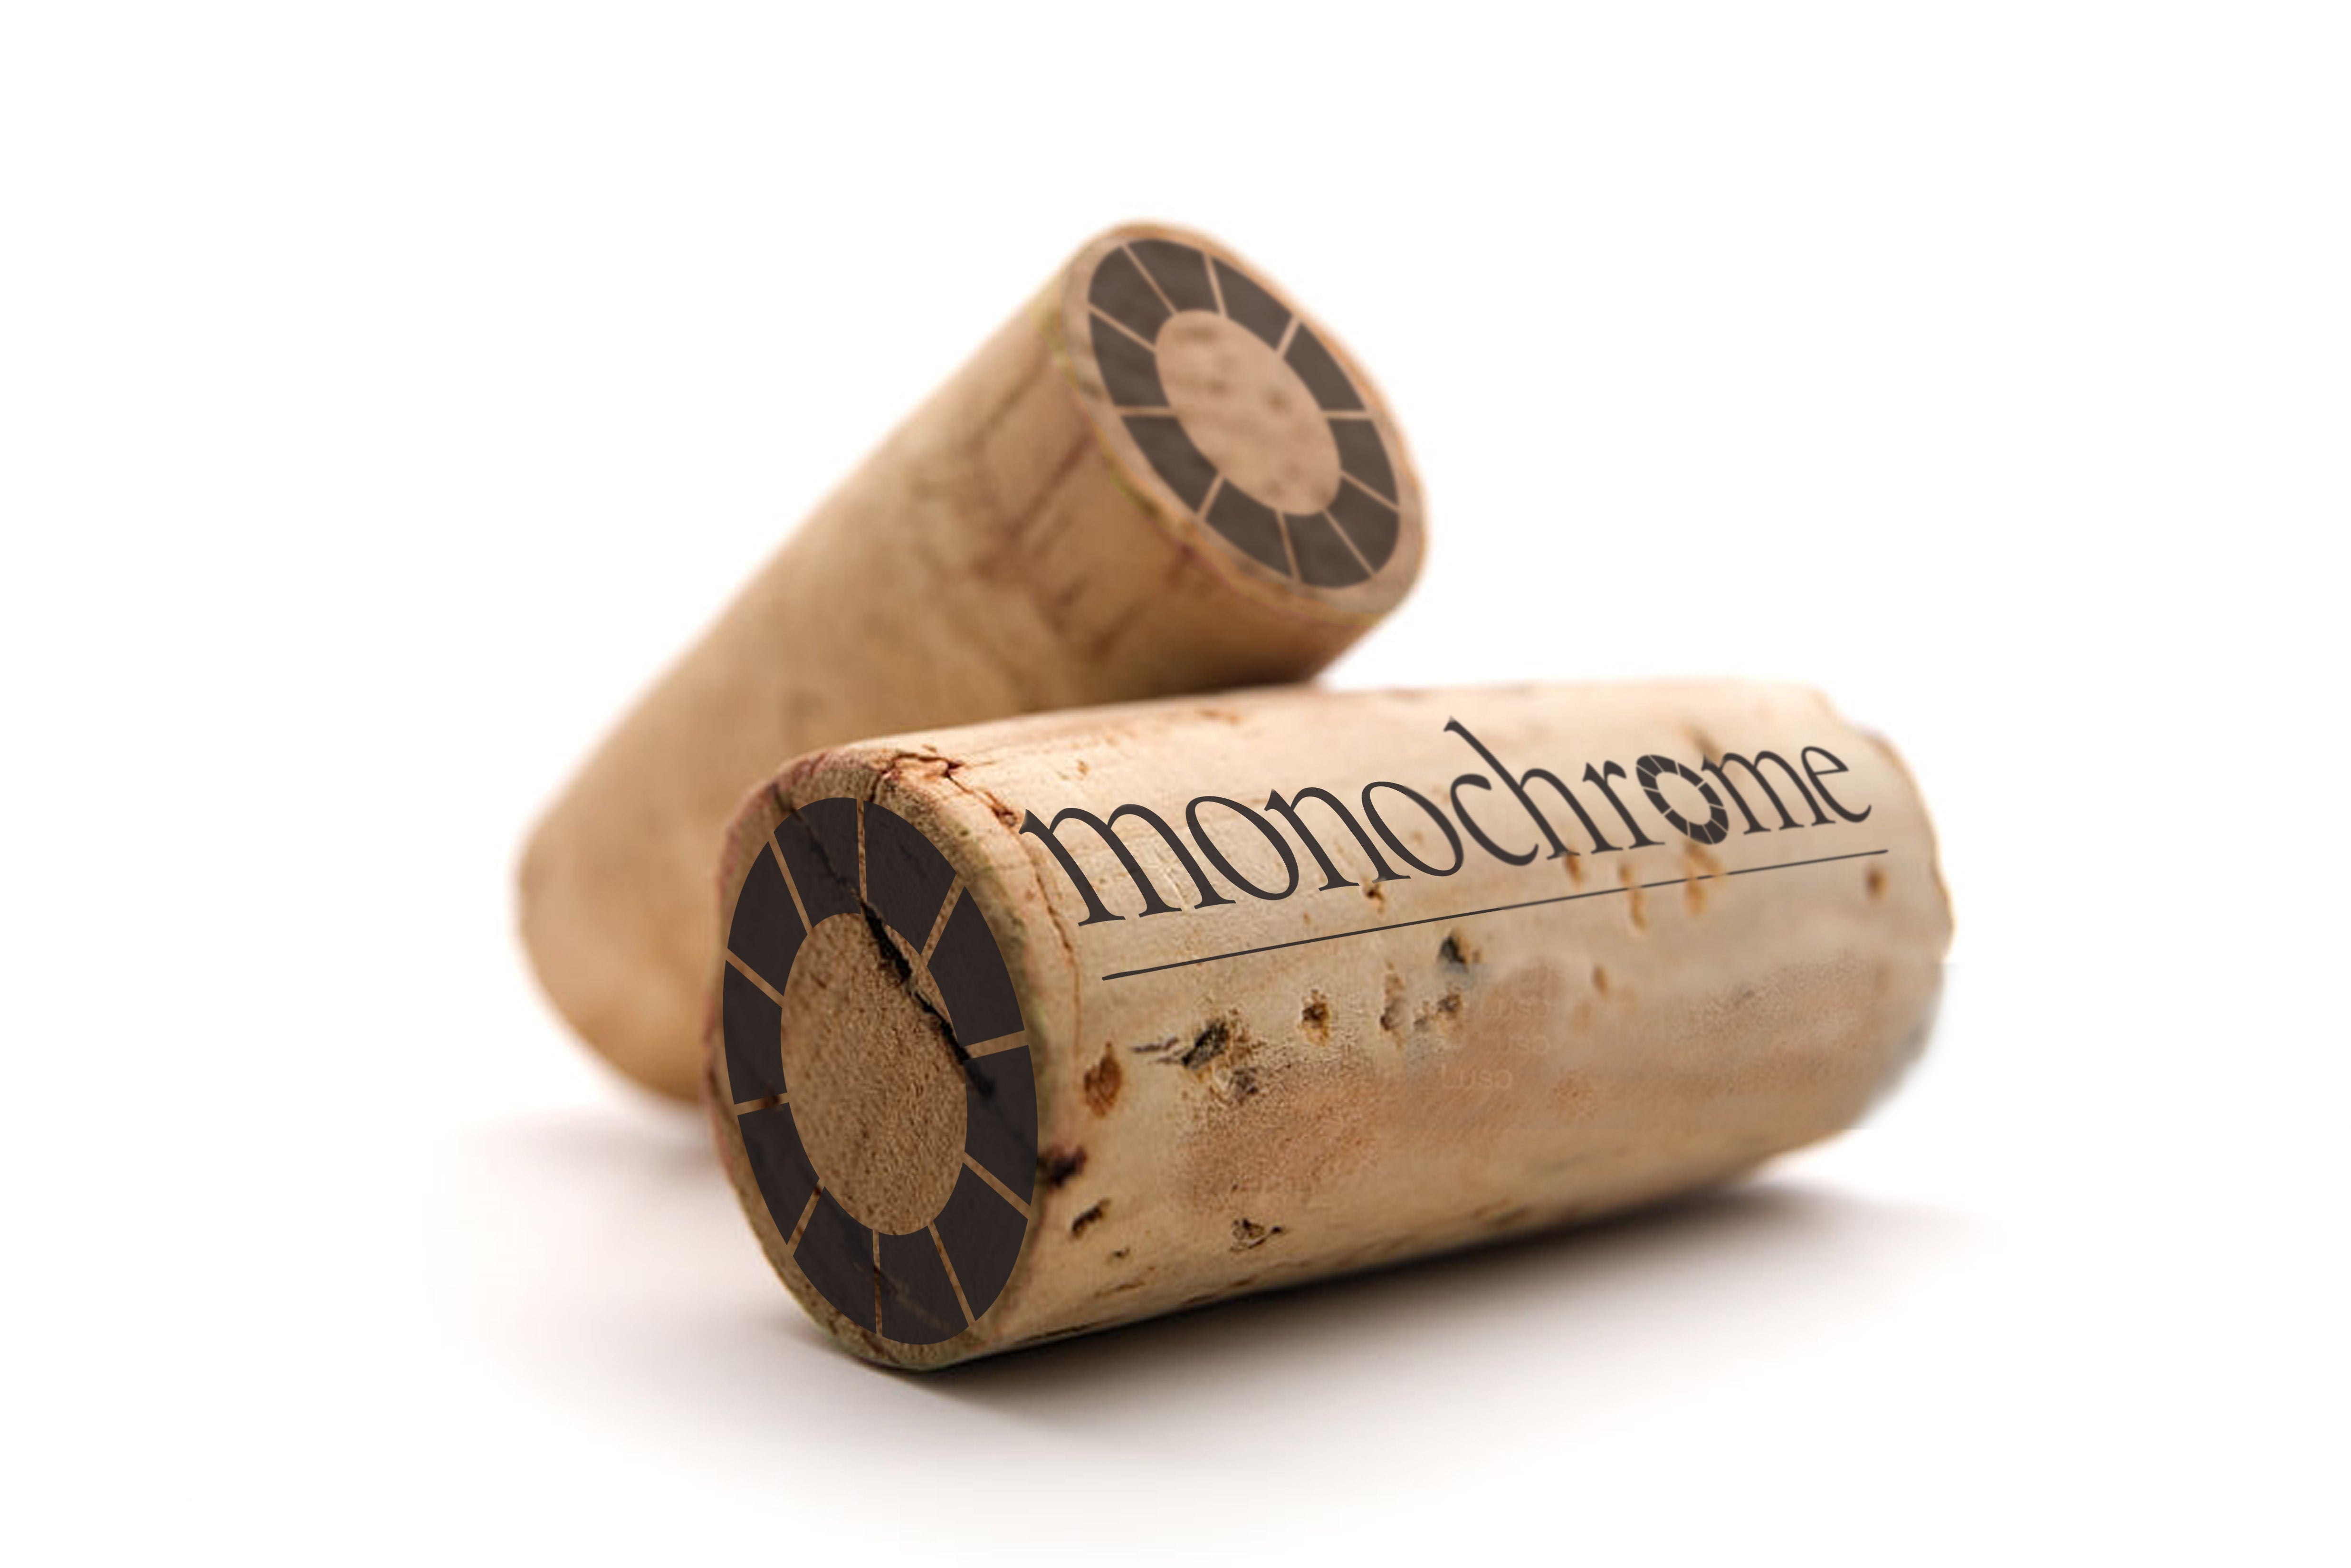 Monochrome corks